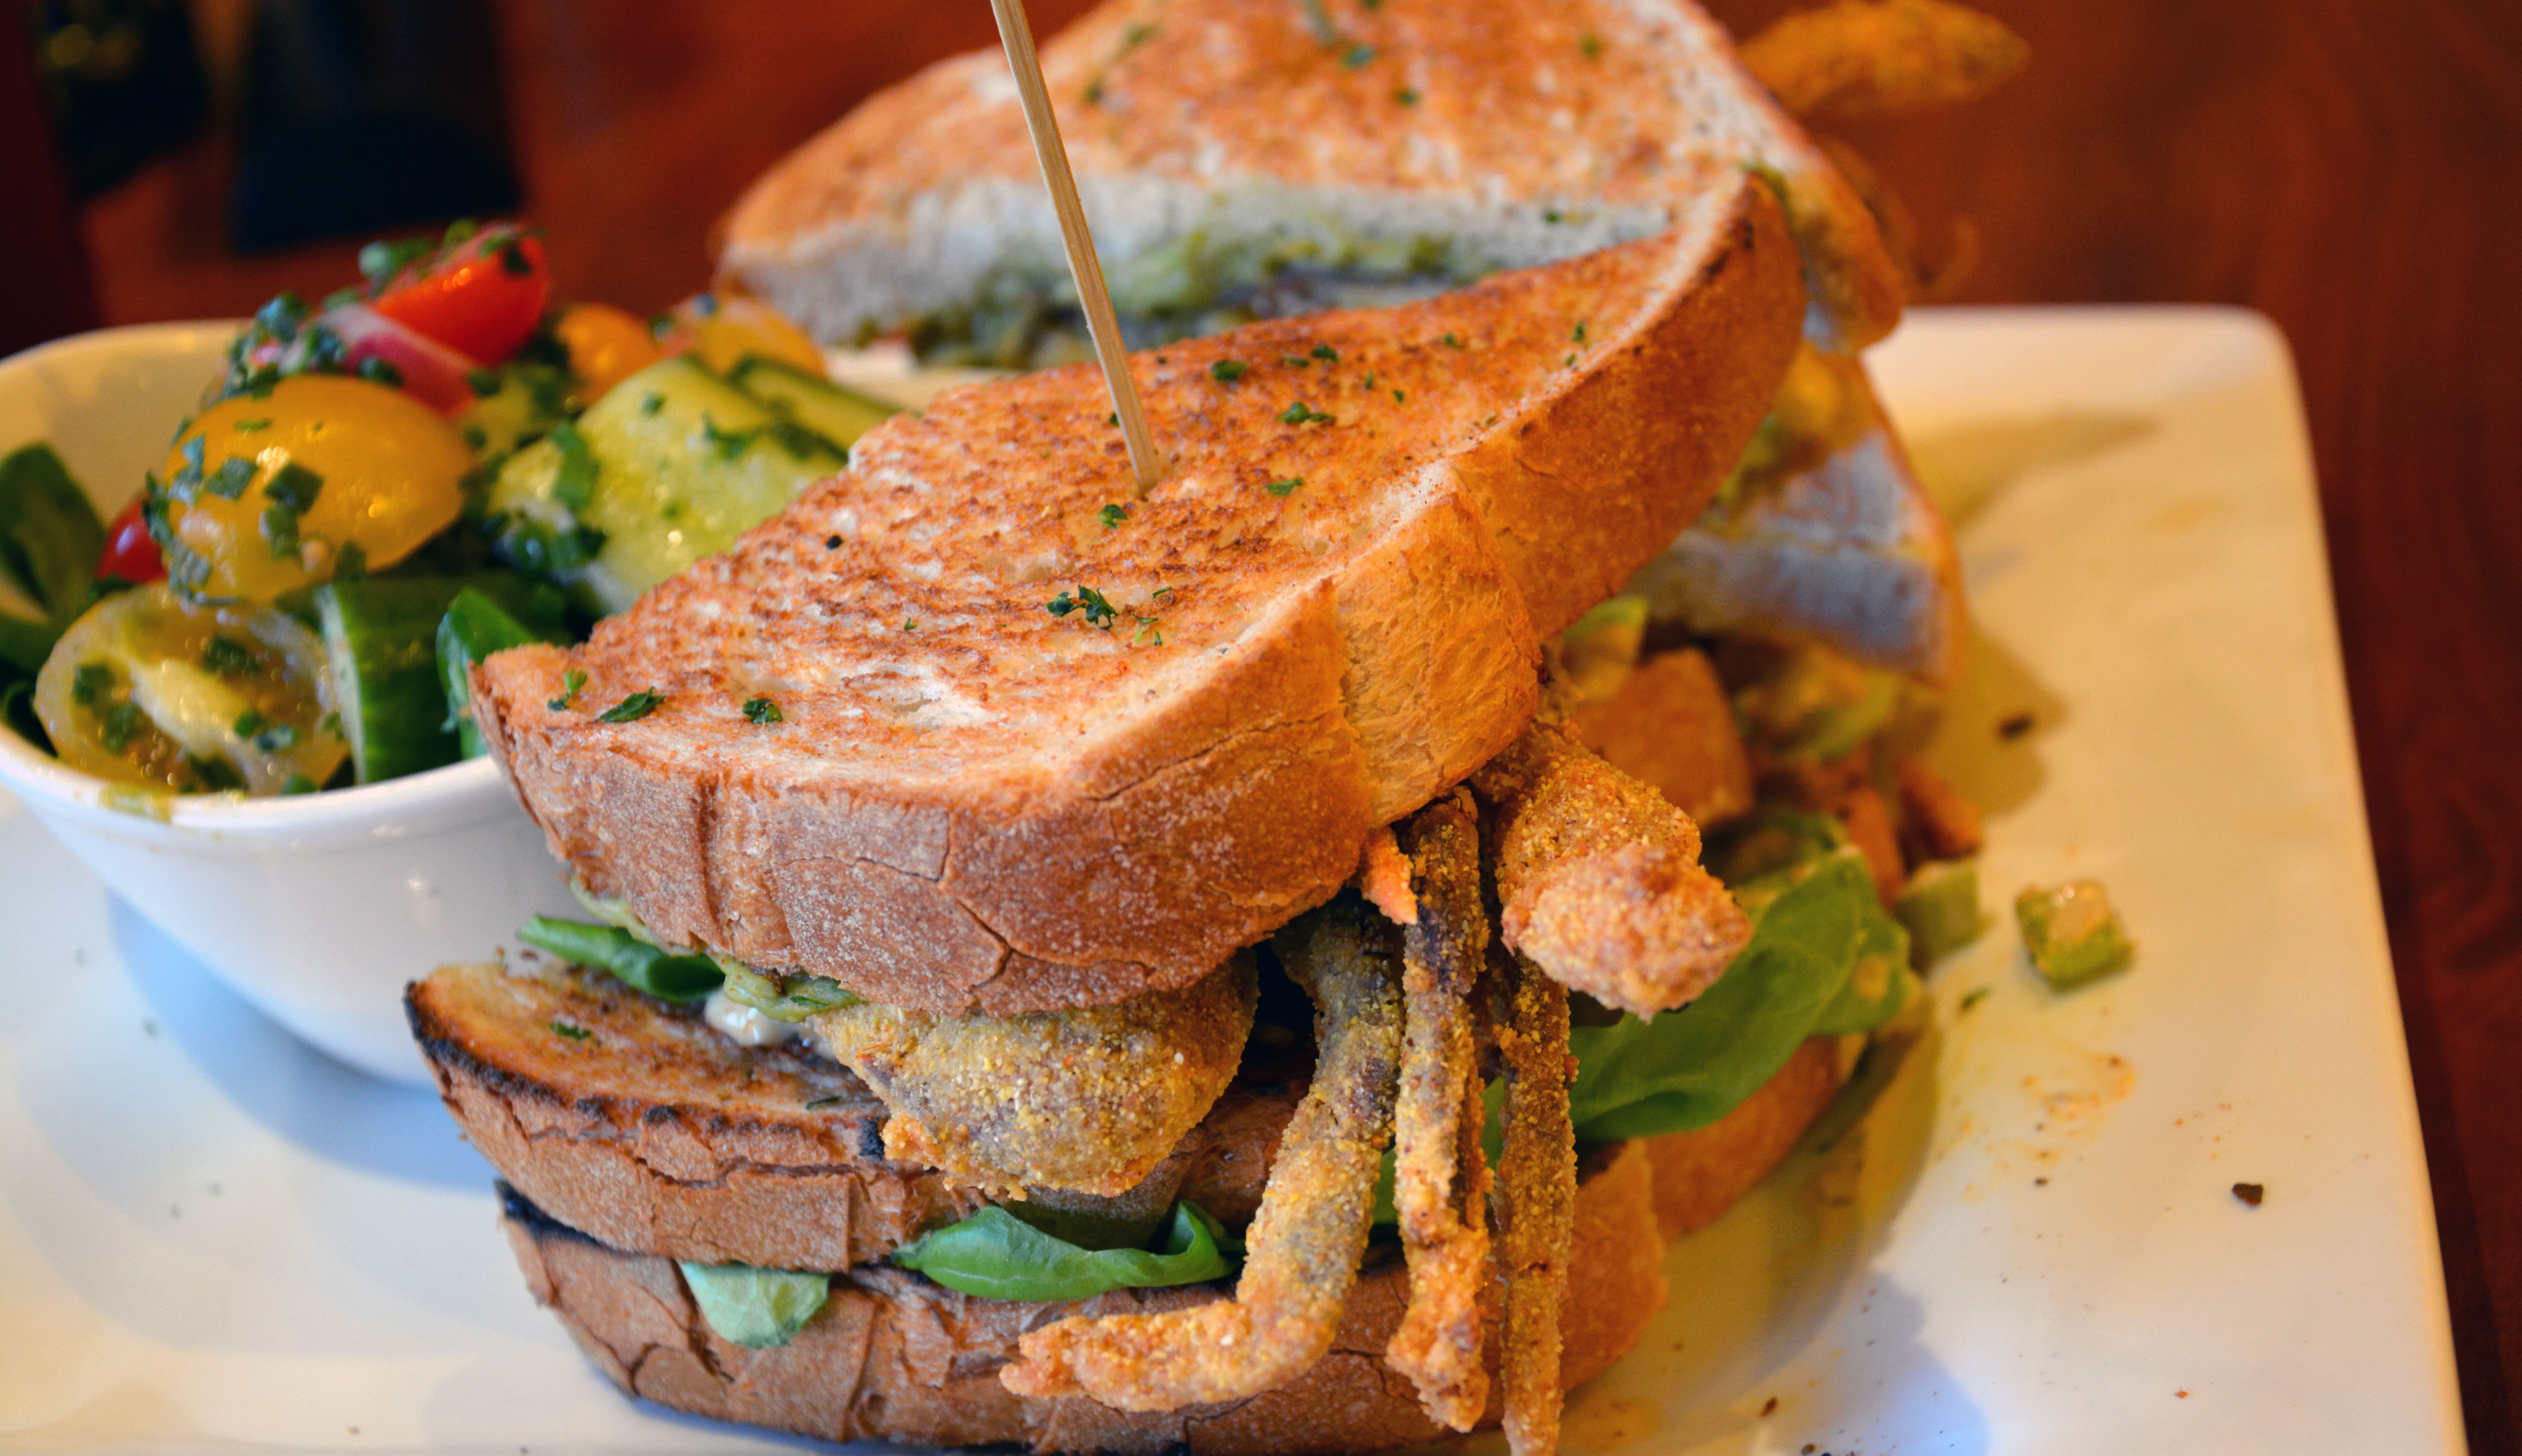 Maryland lawmakers crack open official state sandwich legislation